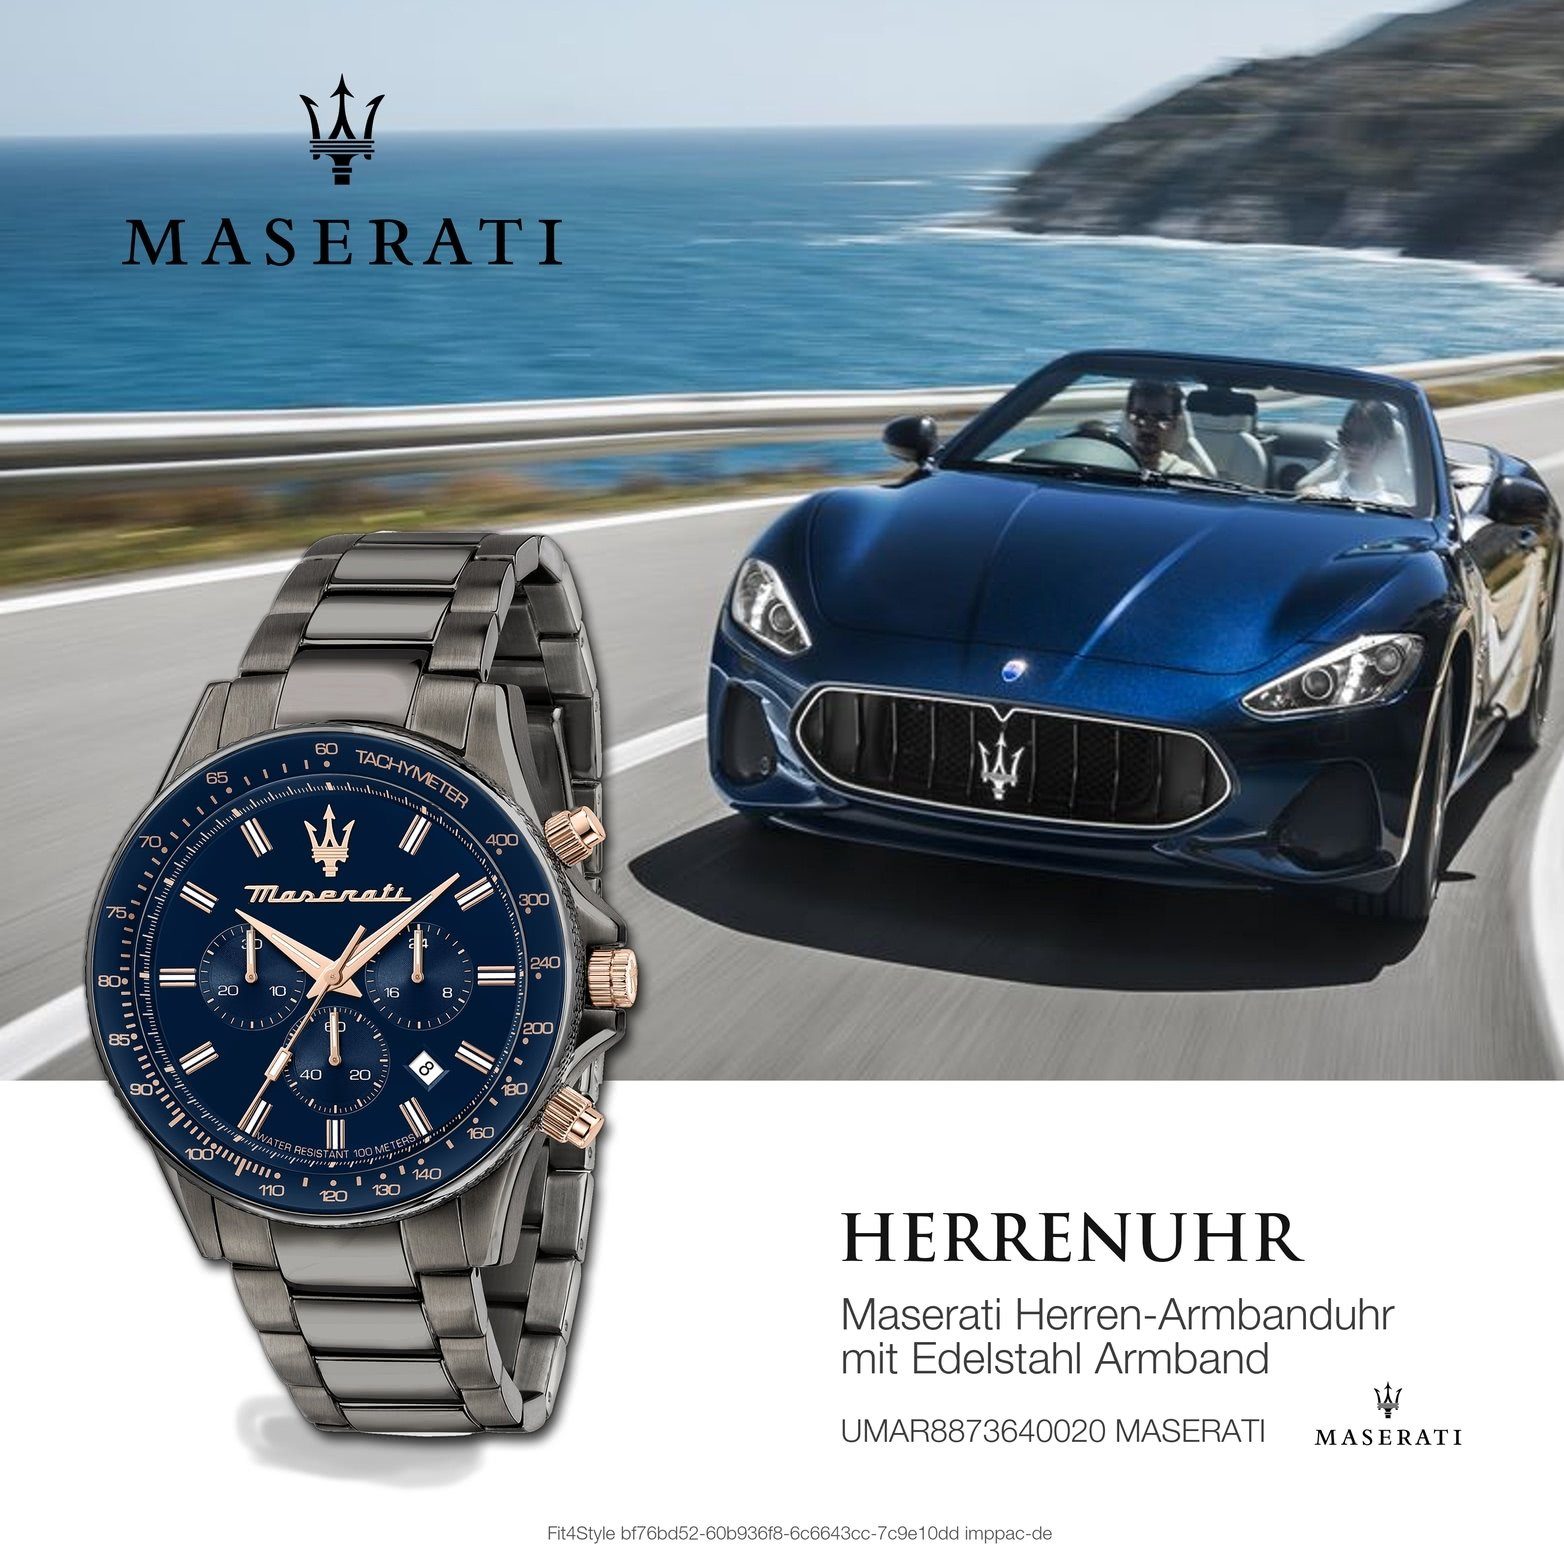 (ca. MASERATI blau Herrenuhr Armbanduhr 44mm) Sfida, Edelstahlarmband, Maserati Gehäuse, groß Herren rundes Chronograph